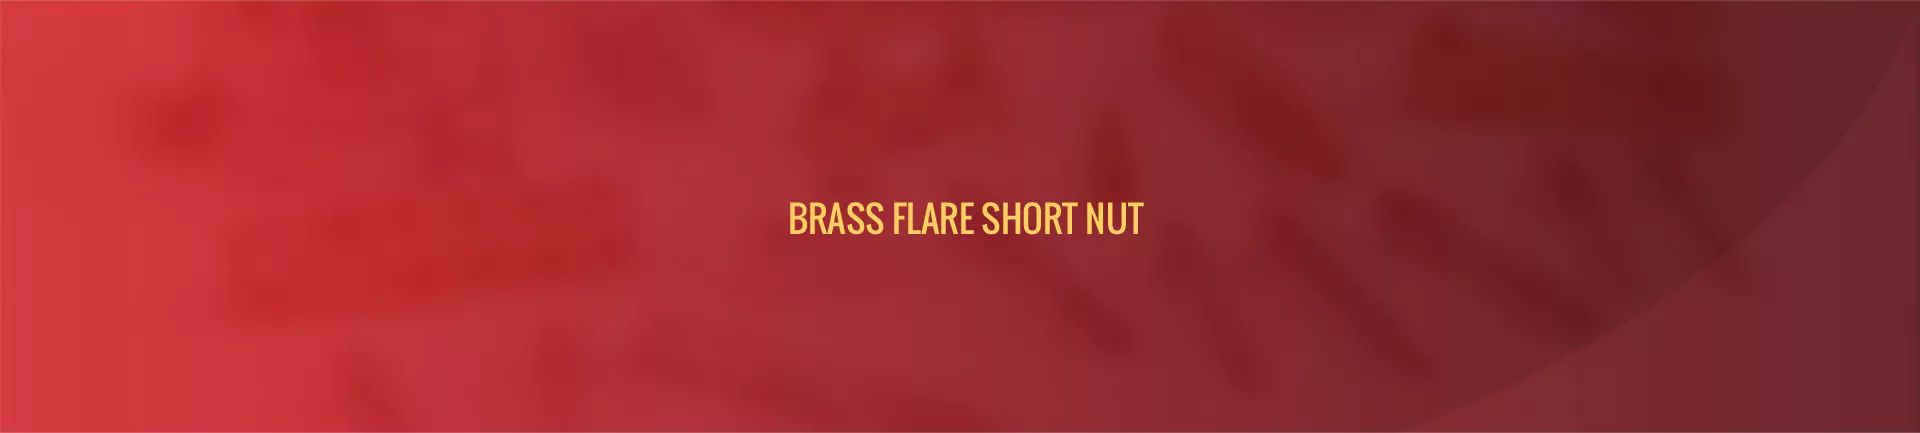 brass_flare_short_nut-banner